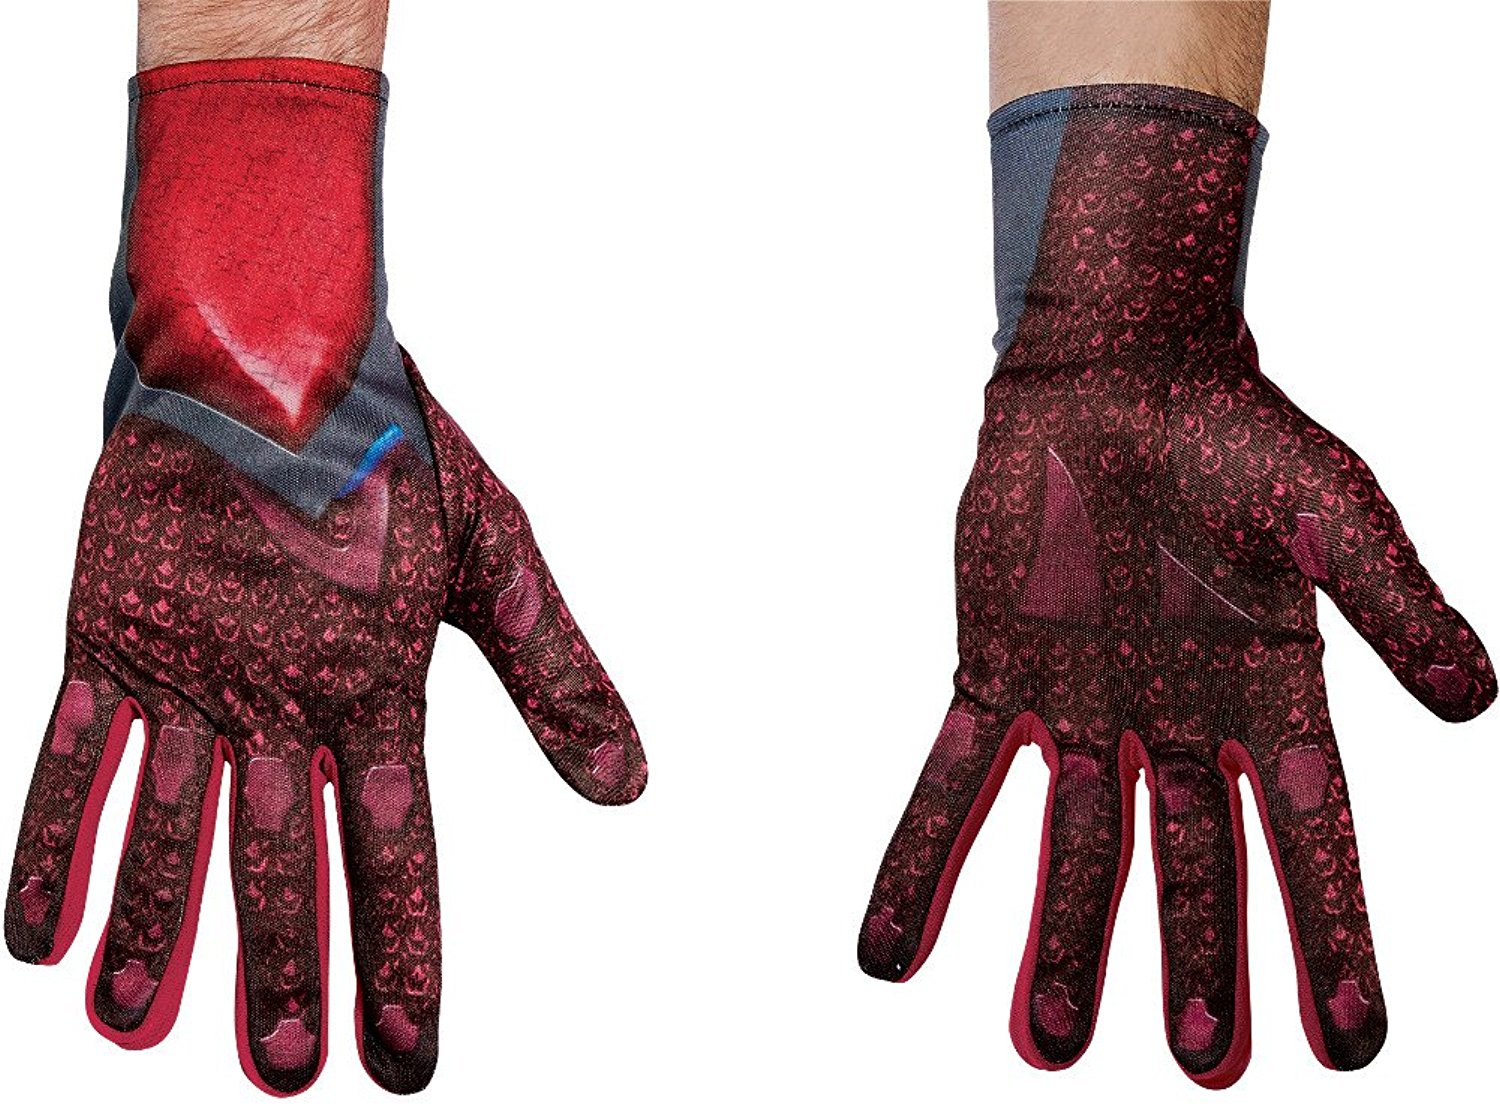 Red Ranger Adult Gloves-Standard